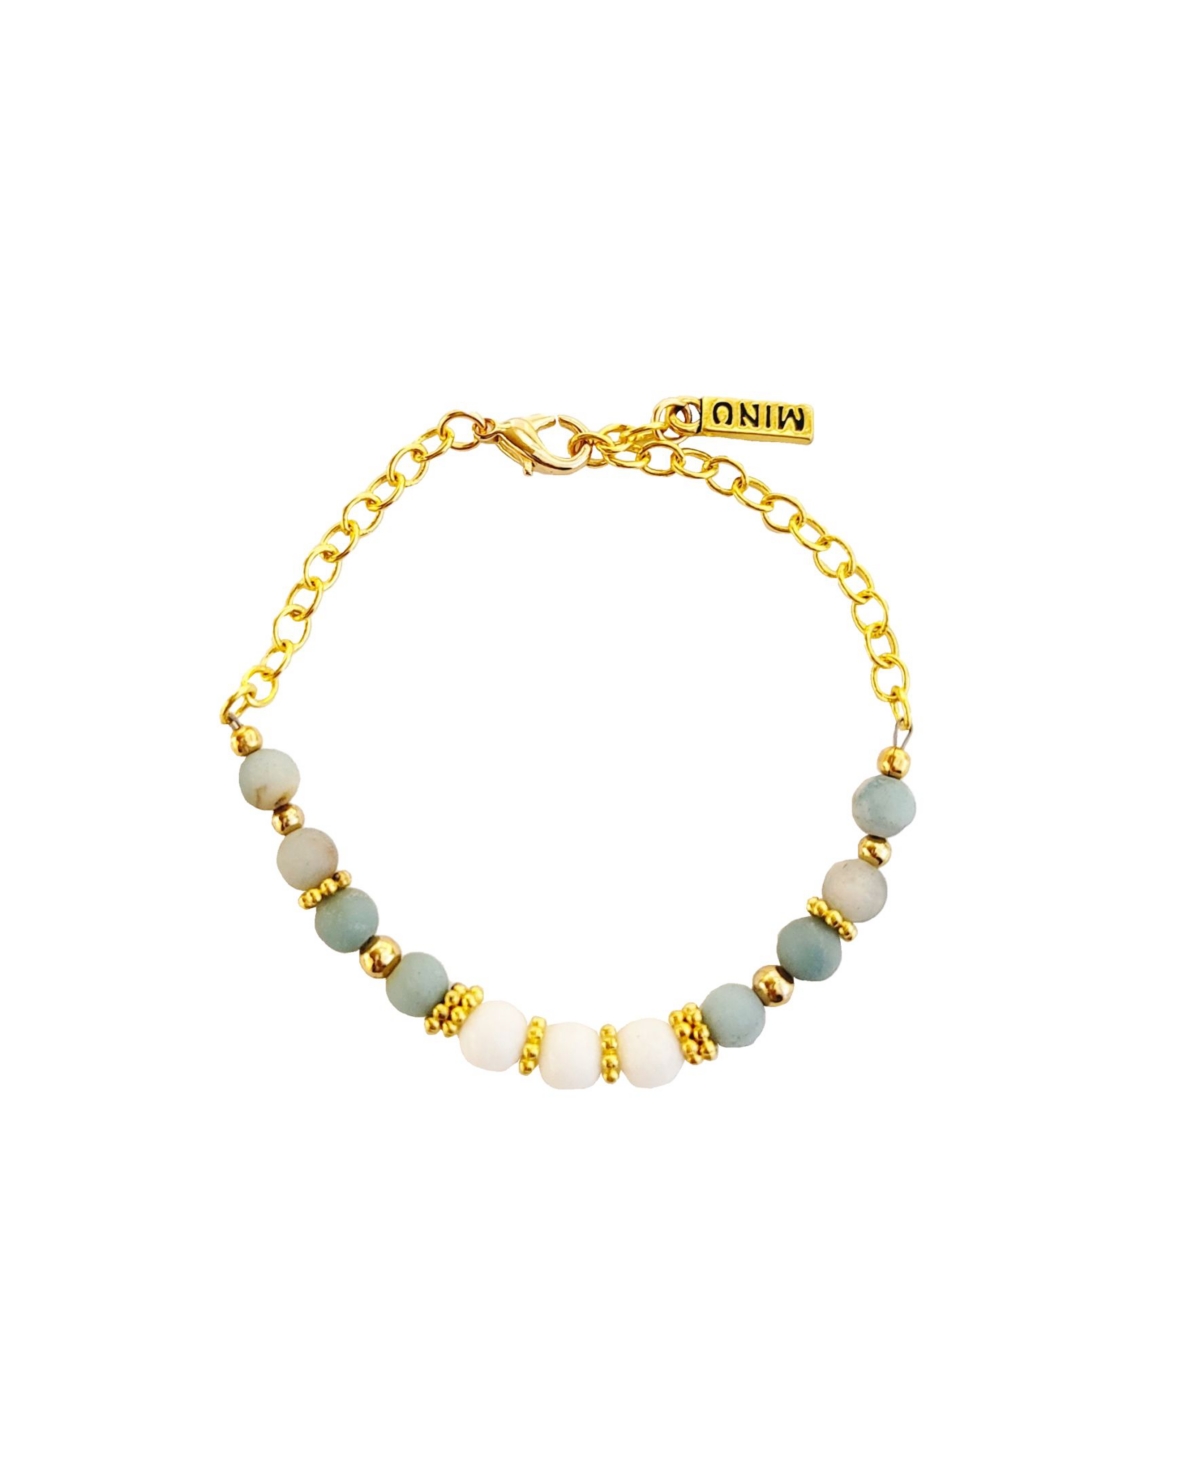 Women's Nurelle Ain Bracelet with Amazonite and White Jade Beads - Gold-tone